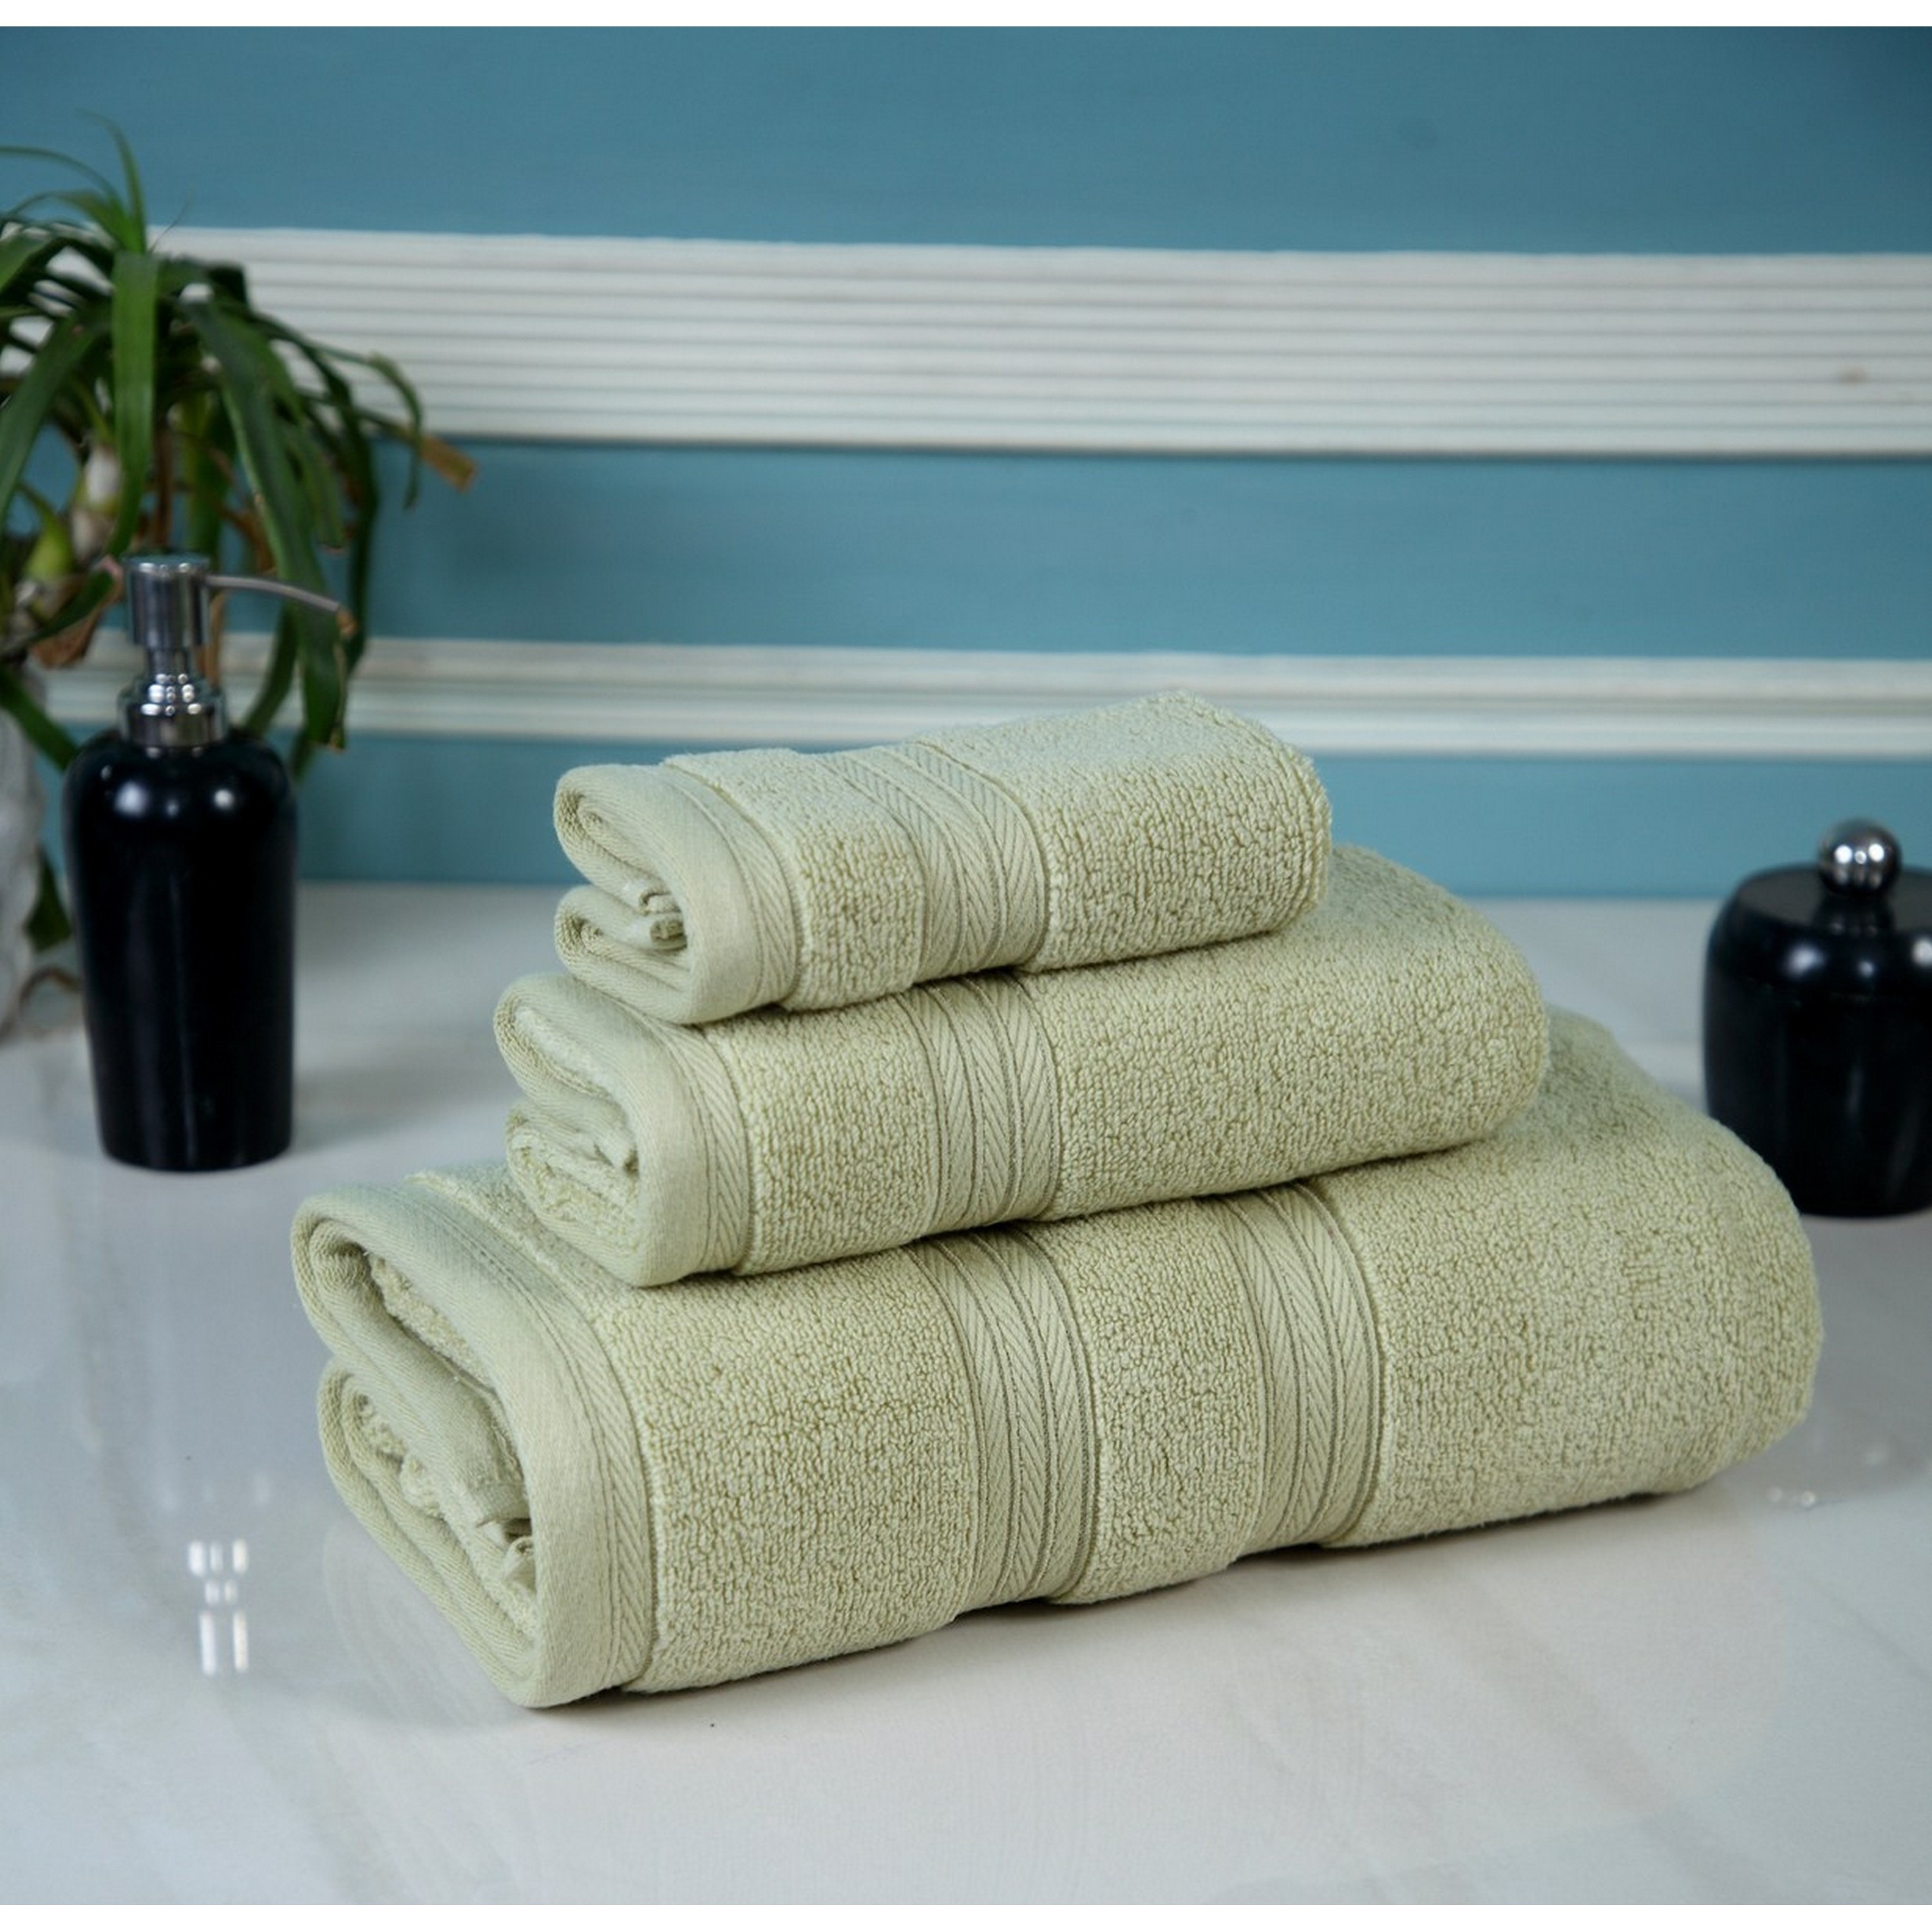 https://ak1.ostkcdn.com/images/products/is/images/direct/955351c2ca13c4e0a3277c8518a739976d8bea4c/Waterford-Towel-Set-of-3%2C-100%25-Premium-Cotton-%26-Luxury-Sets%2C-1-Bath-Towel-27%22x54%22%2C-1-Hand-Towel-16%22x28%22-%26-1-Washcloth-13%22x13%22.jpg